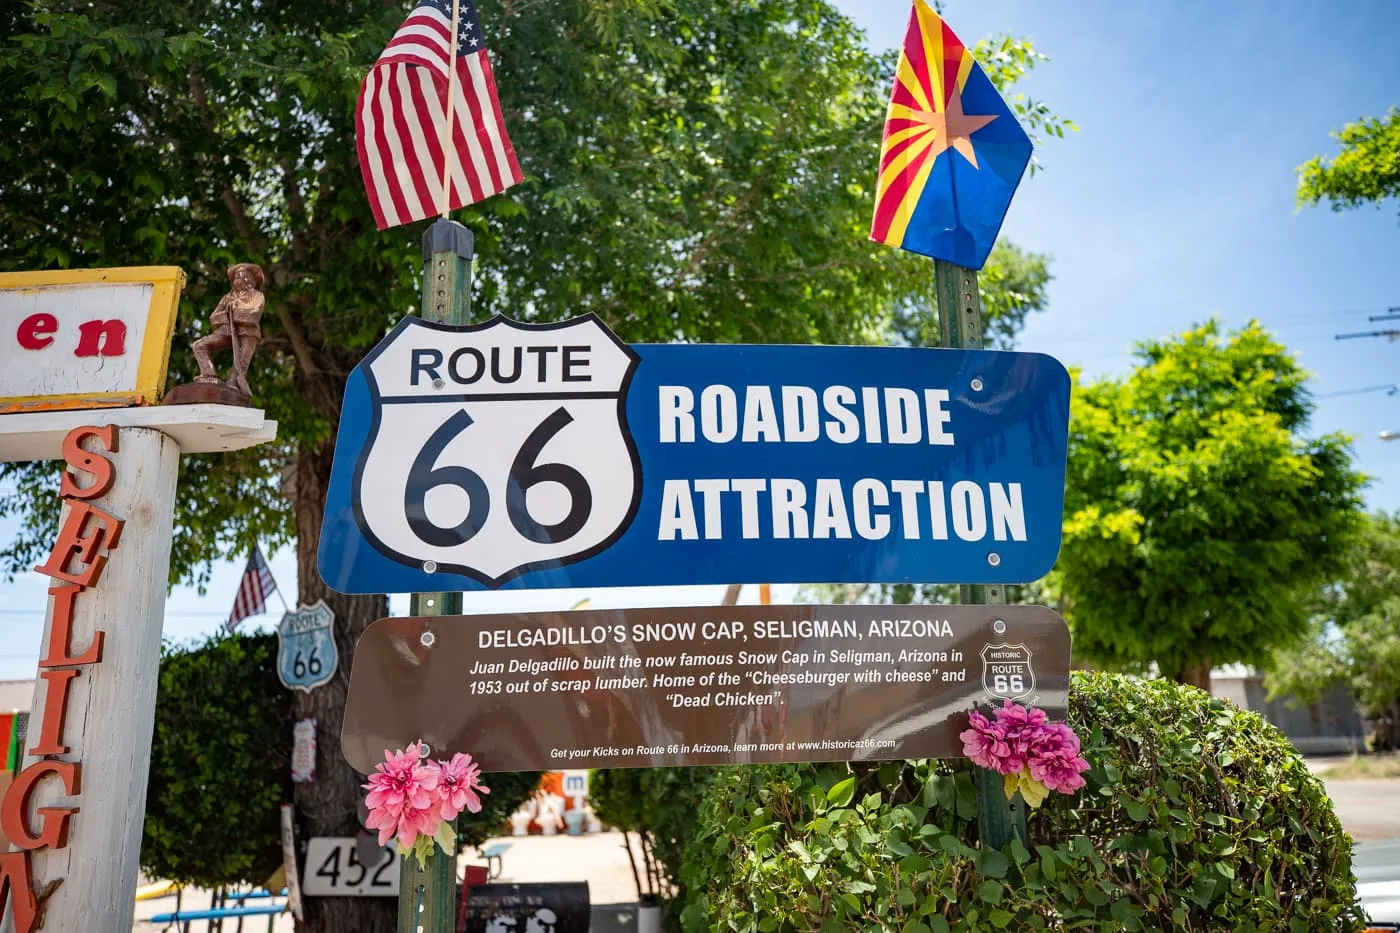 Route 66 Roadside Attraction Marker Sign at Delgadillo’s Snow Cap in Seligman, Arizona - Route 66 restaurant and Drive-In Diner